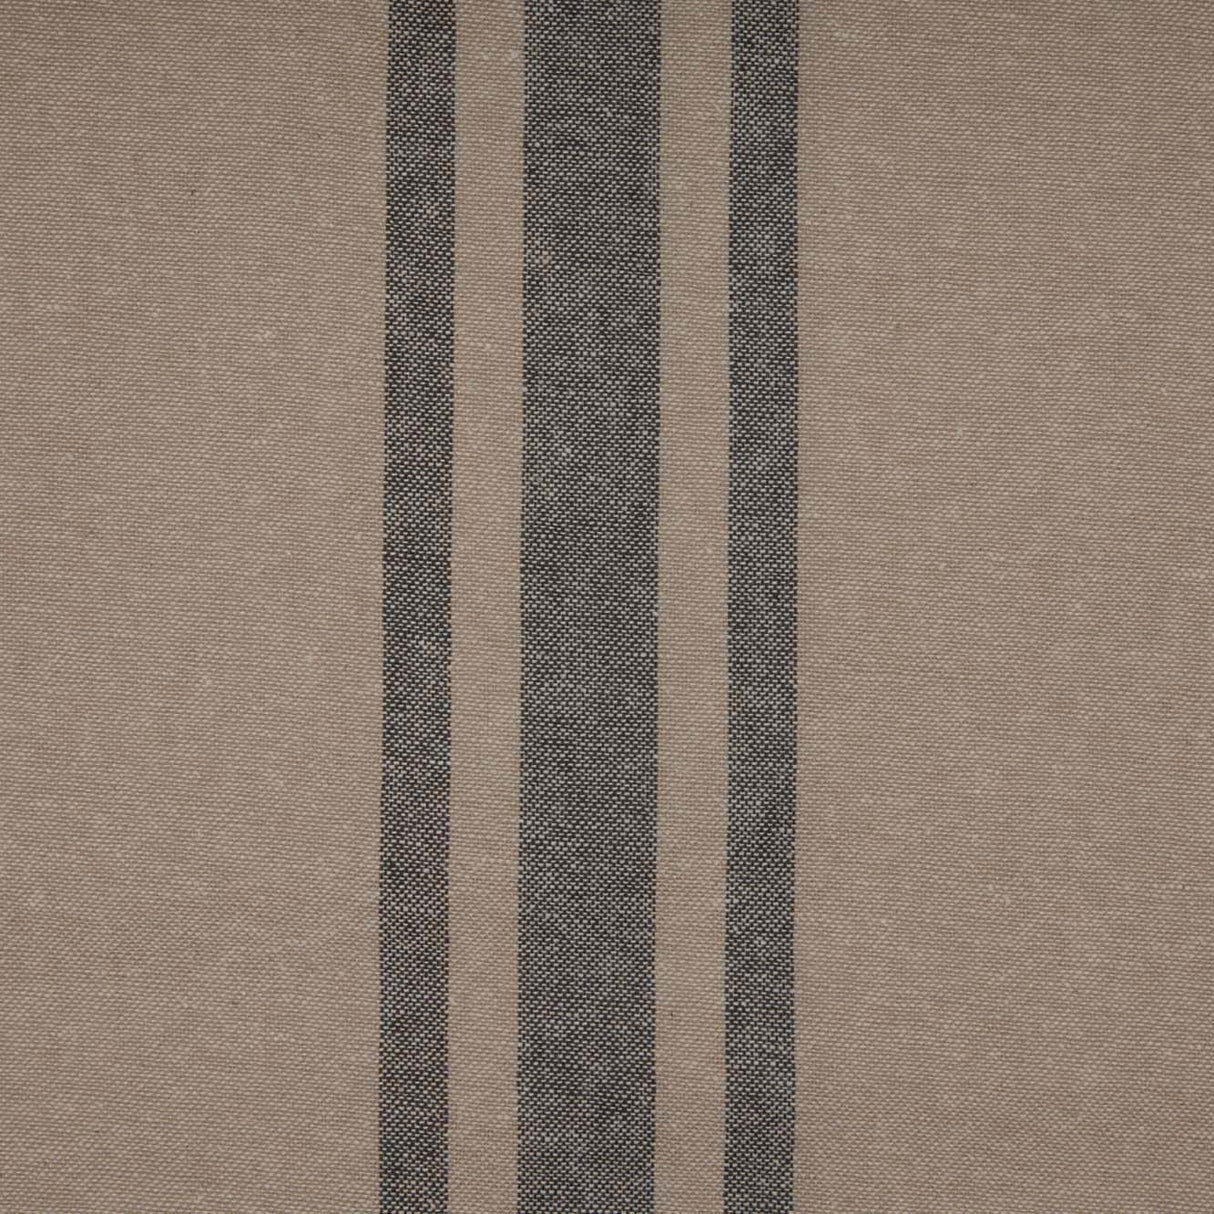 70107-Grain-Sack-Charcoal-Prairie-Long-Panel-Set-of-2-84x36x18-image-7